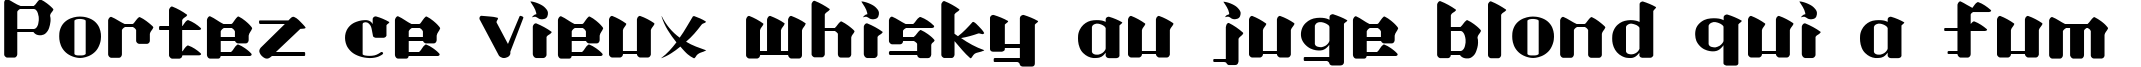 Пример написания шрифтом Lightmorning текста на французском